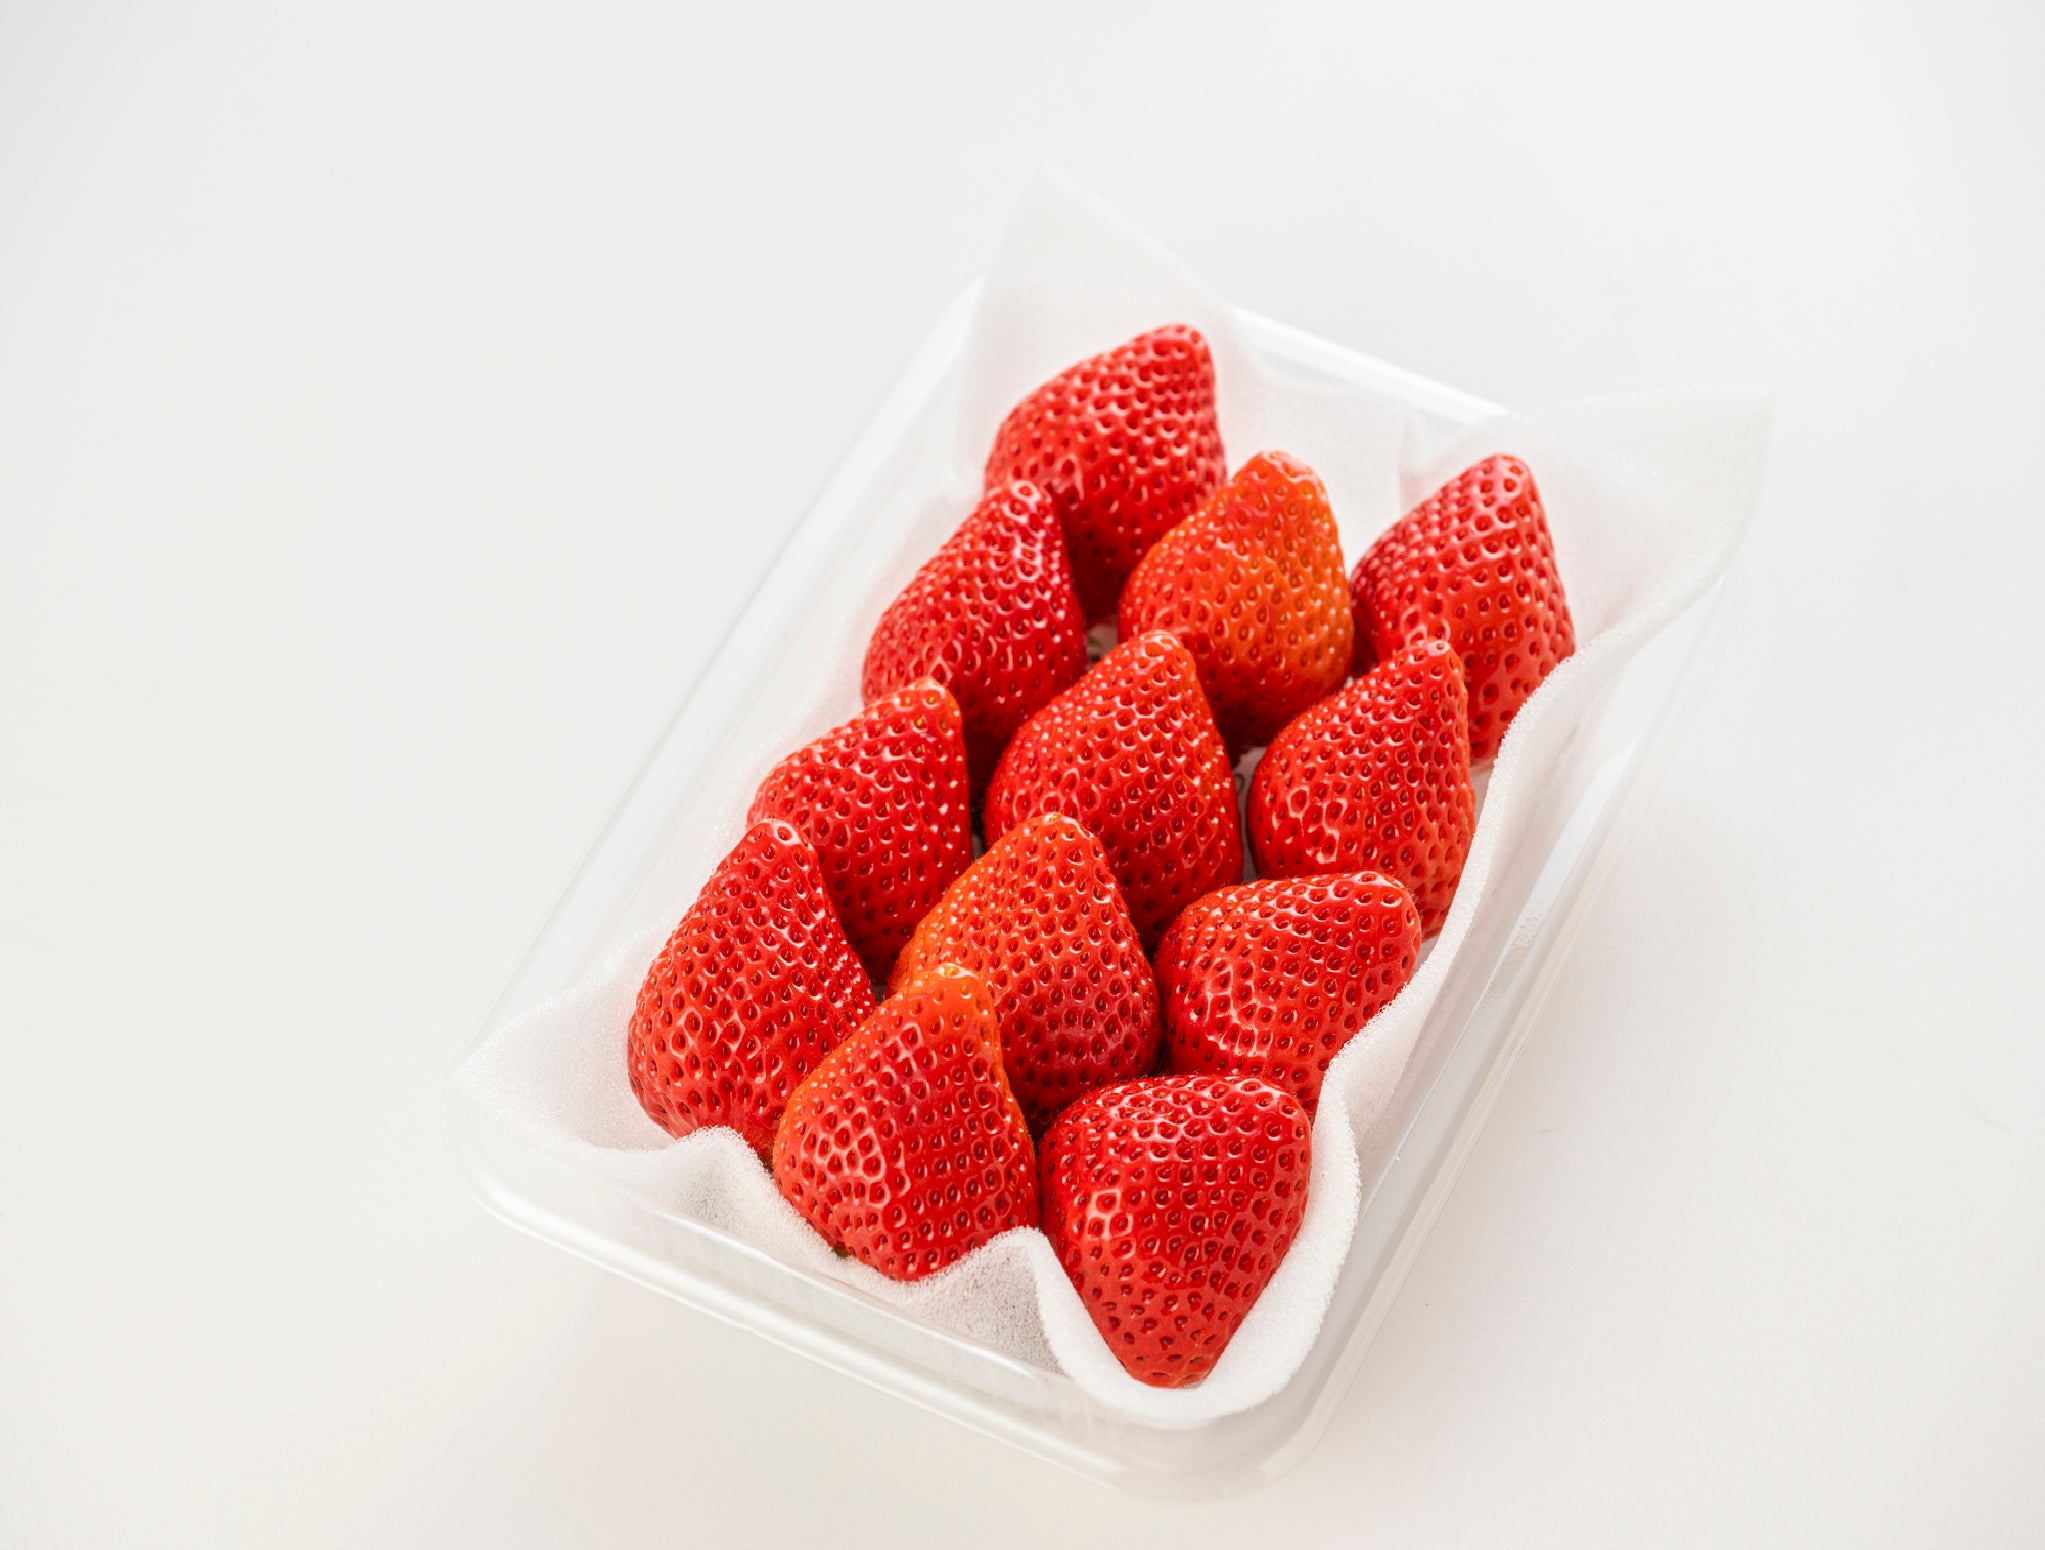 Japanese Strawberry Large 270g - limited availability